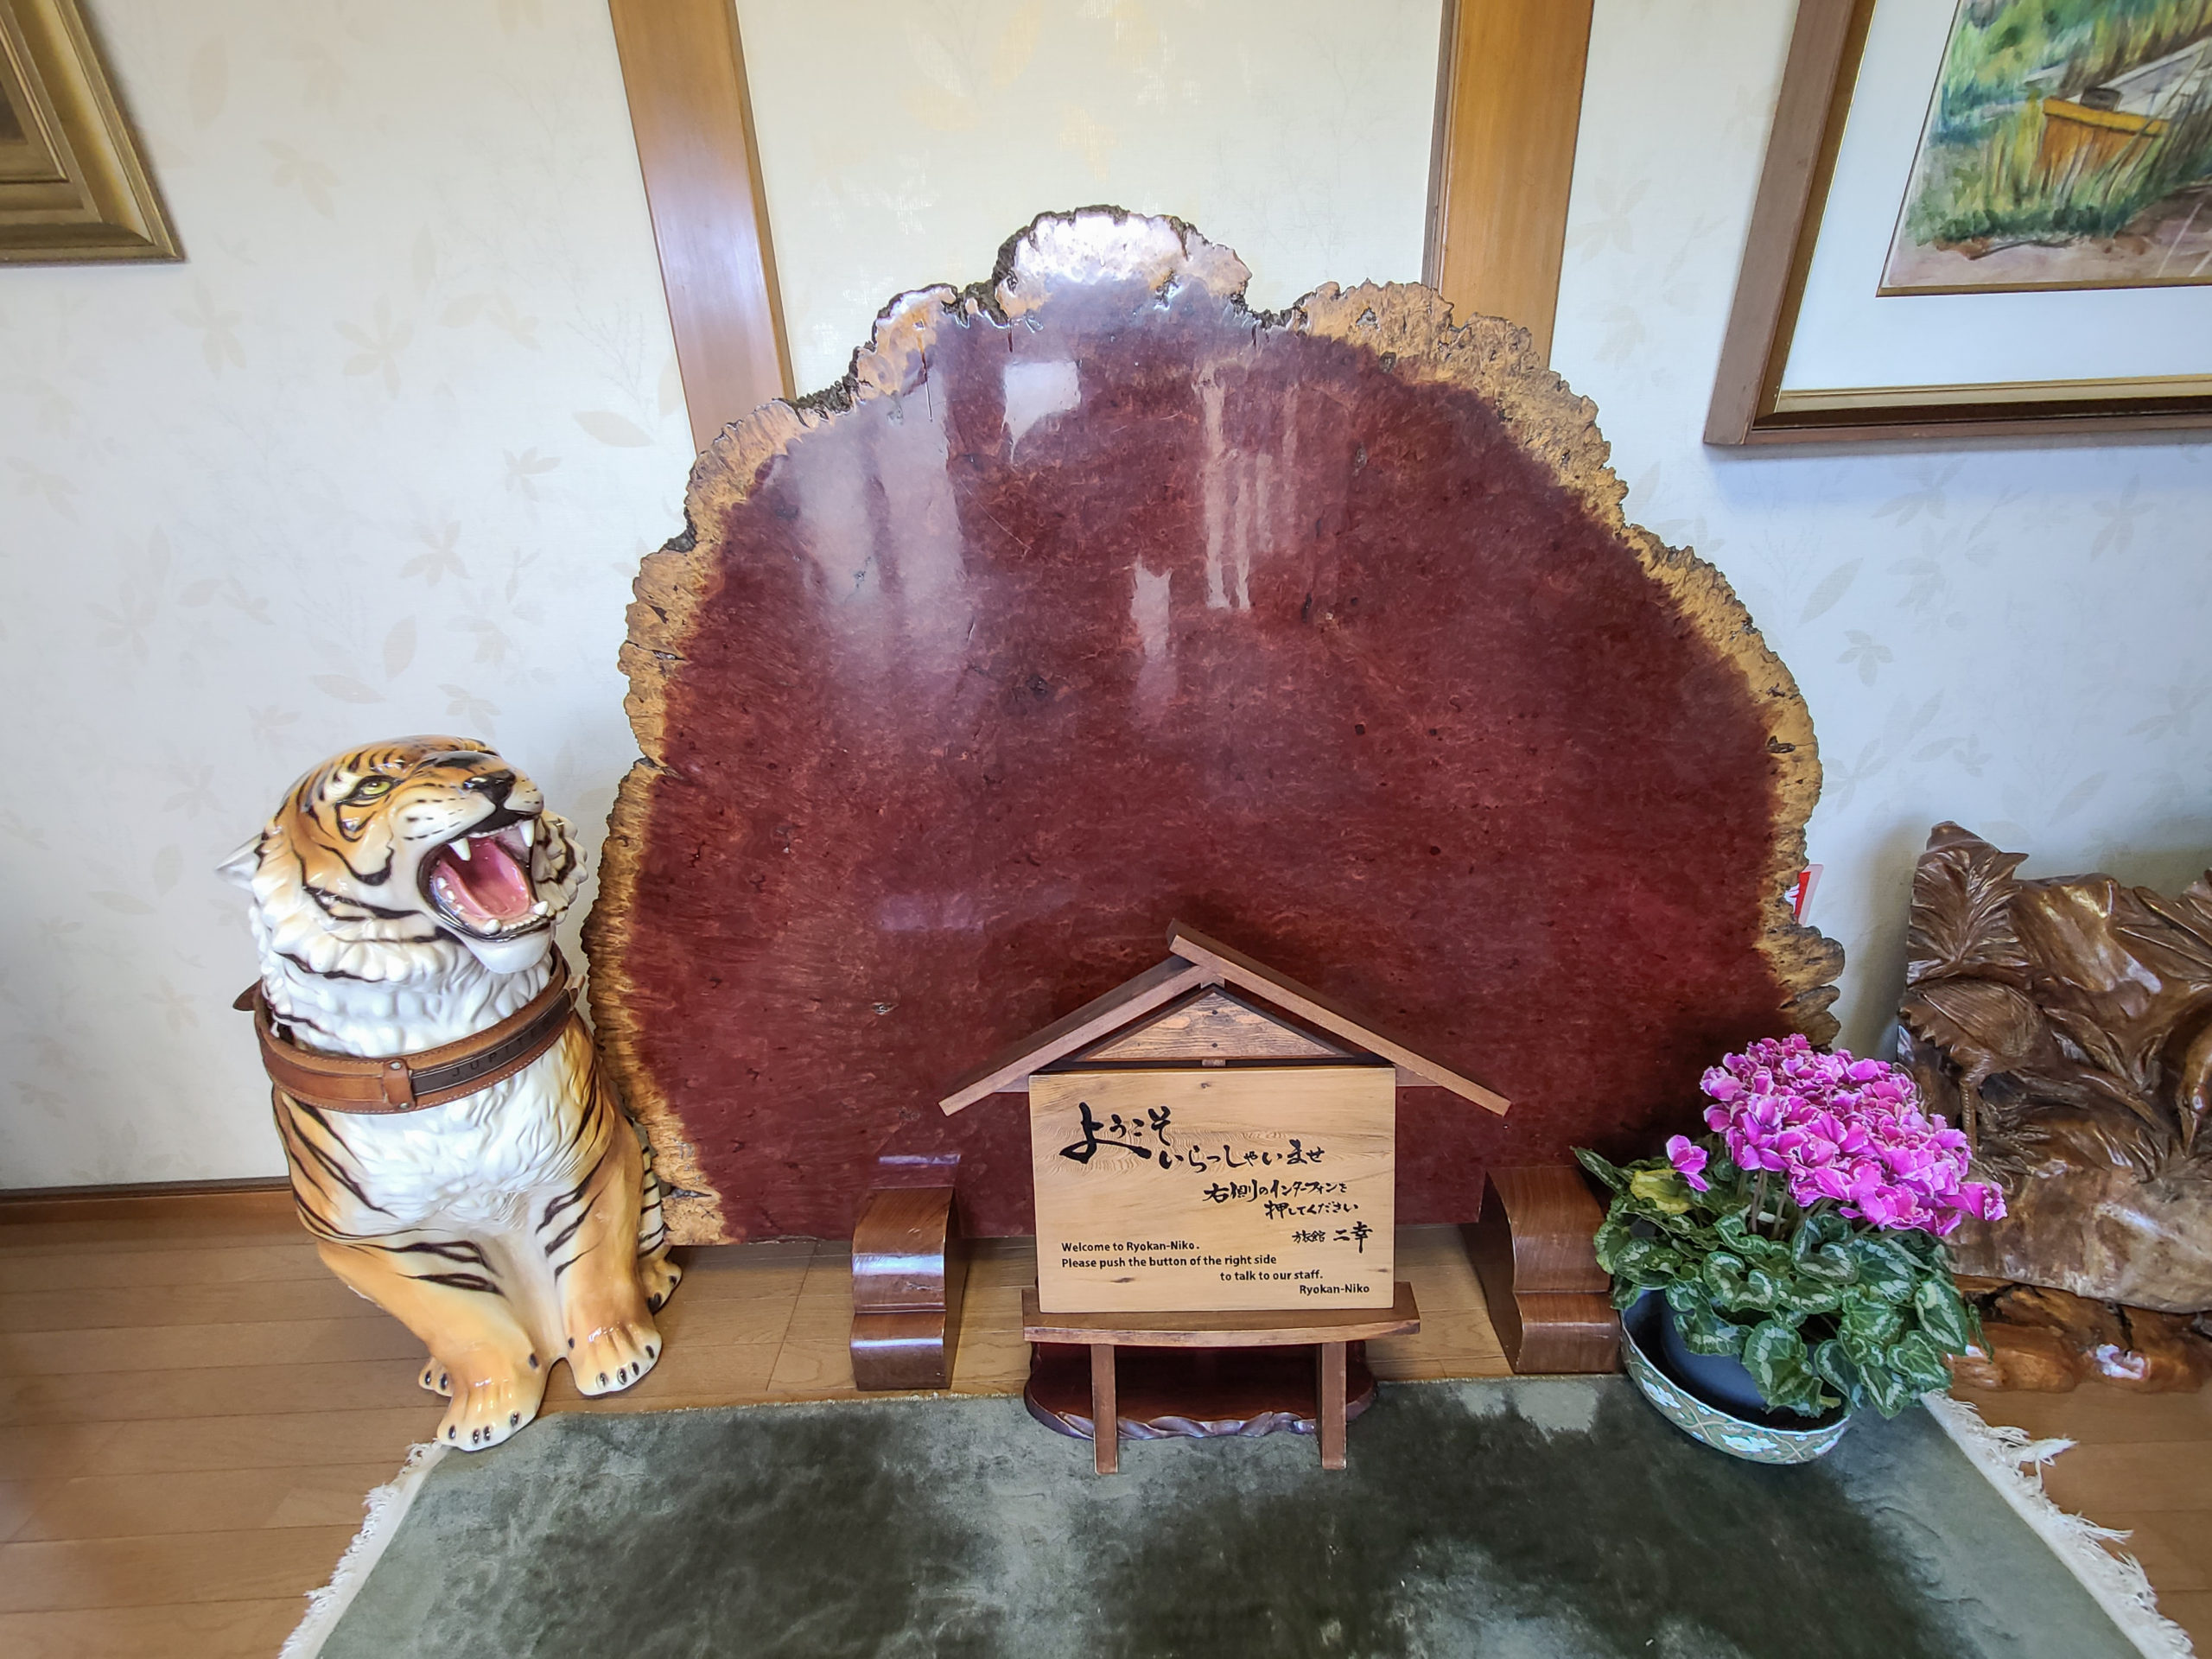 A porcelain tiger named “Jupiter” greets guests in the entryway